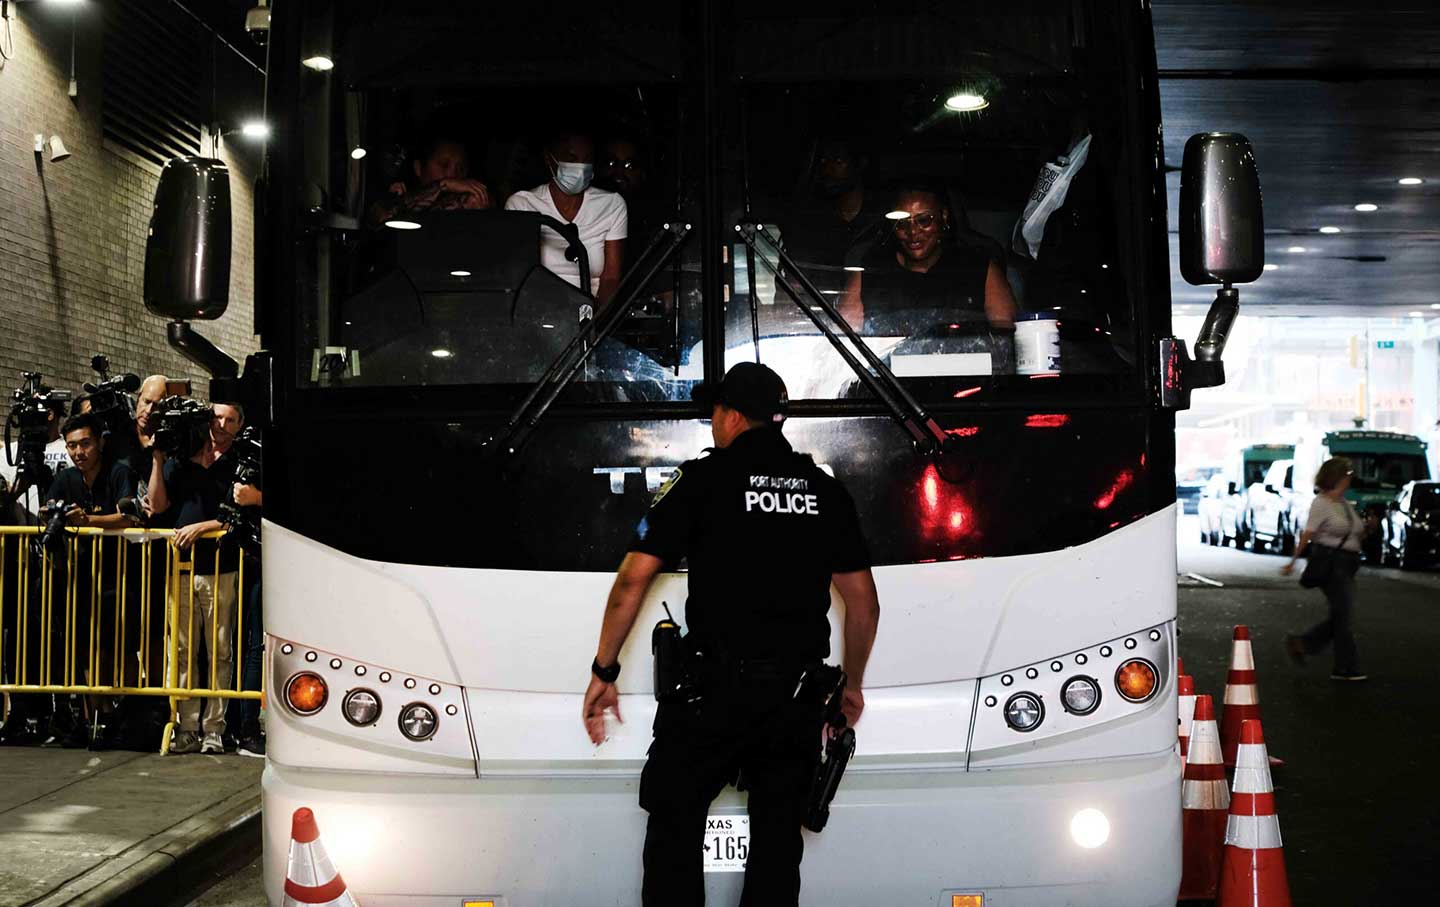 Bus of migrants arriving in New York City